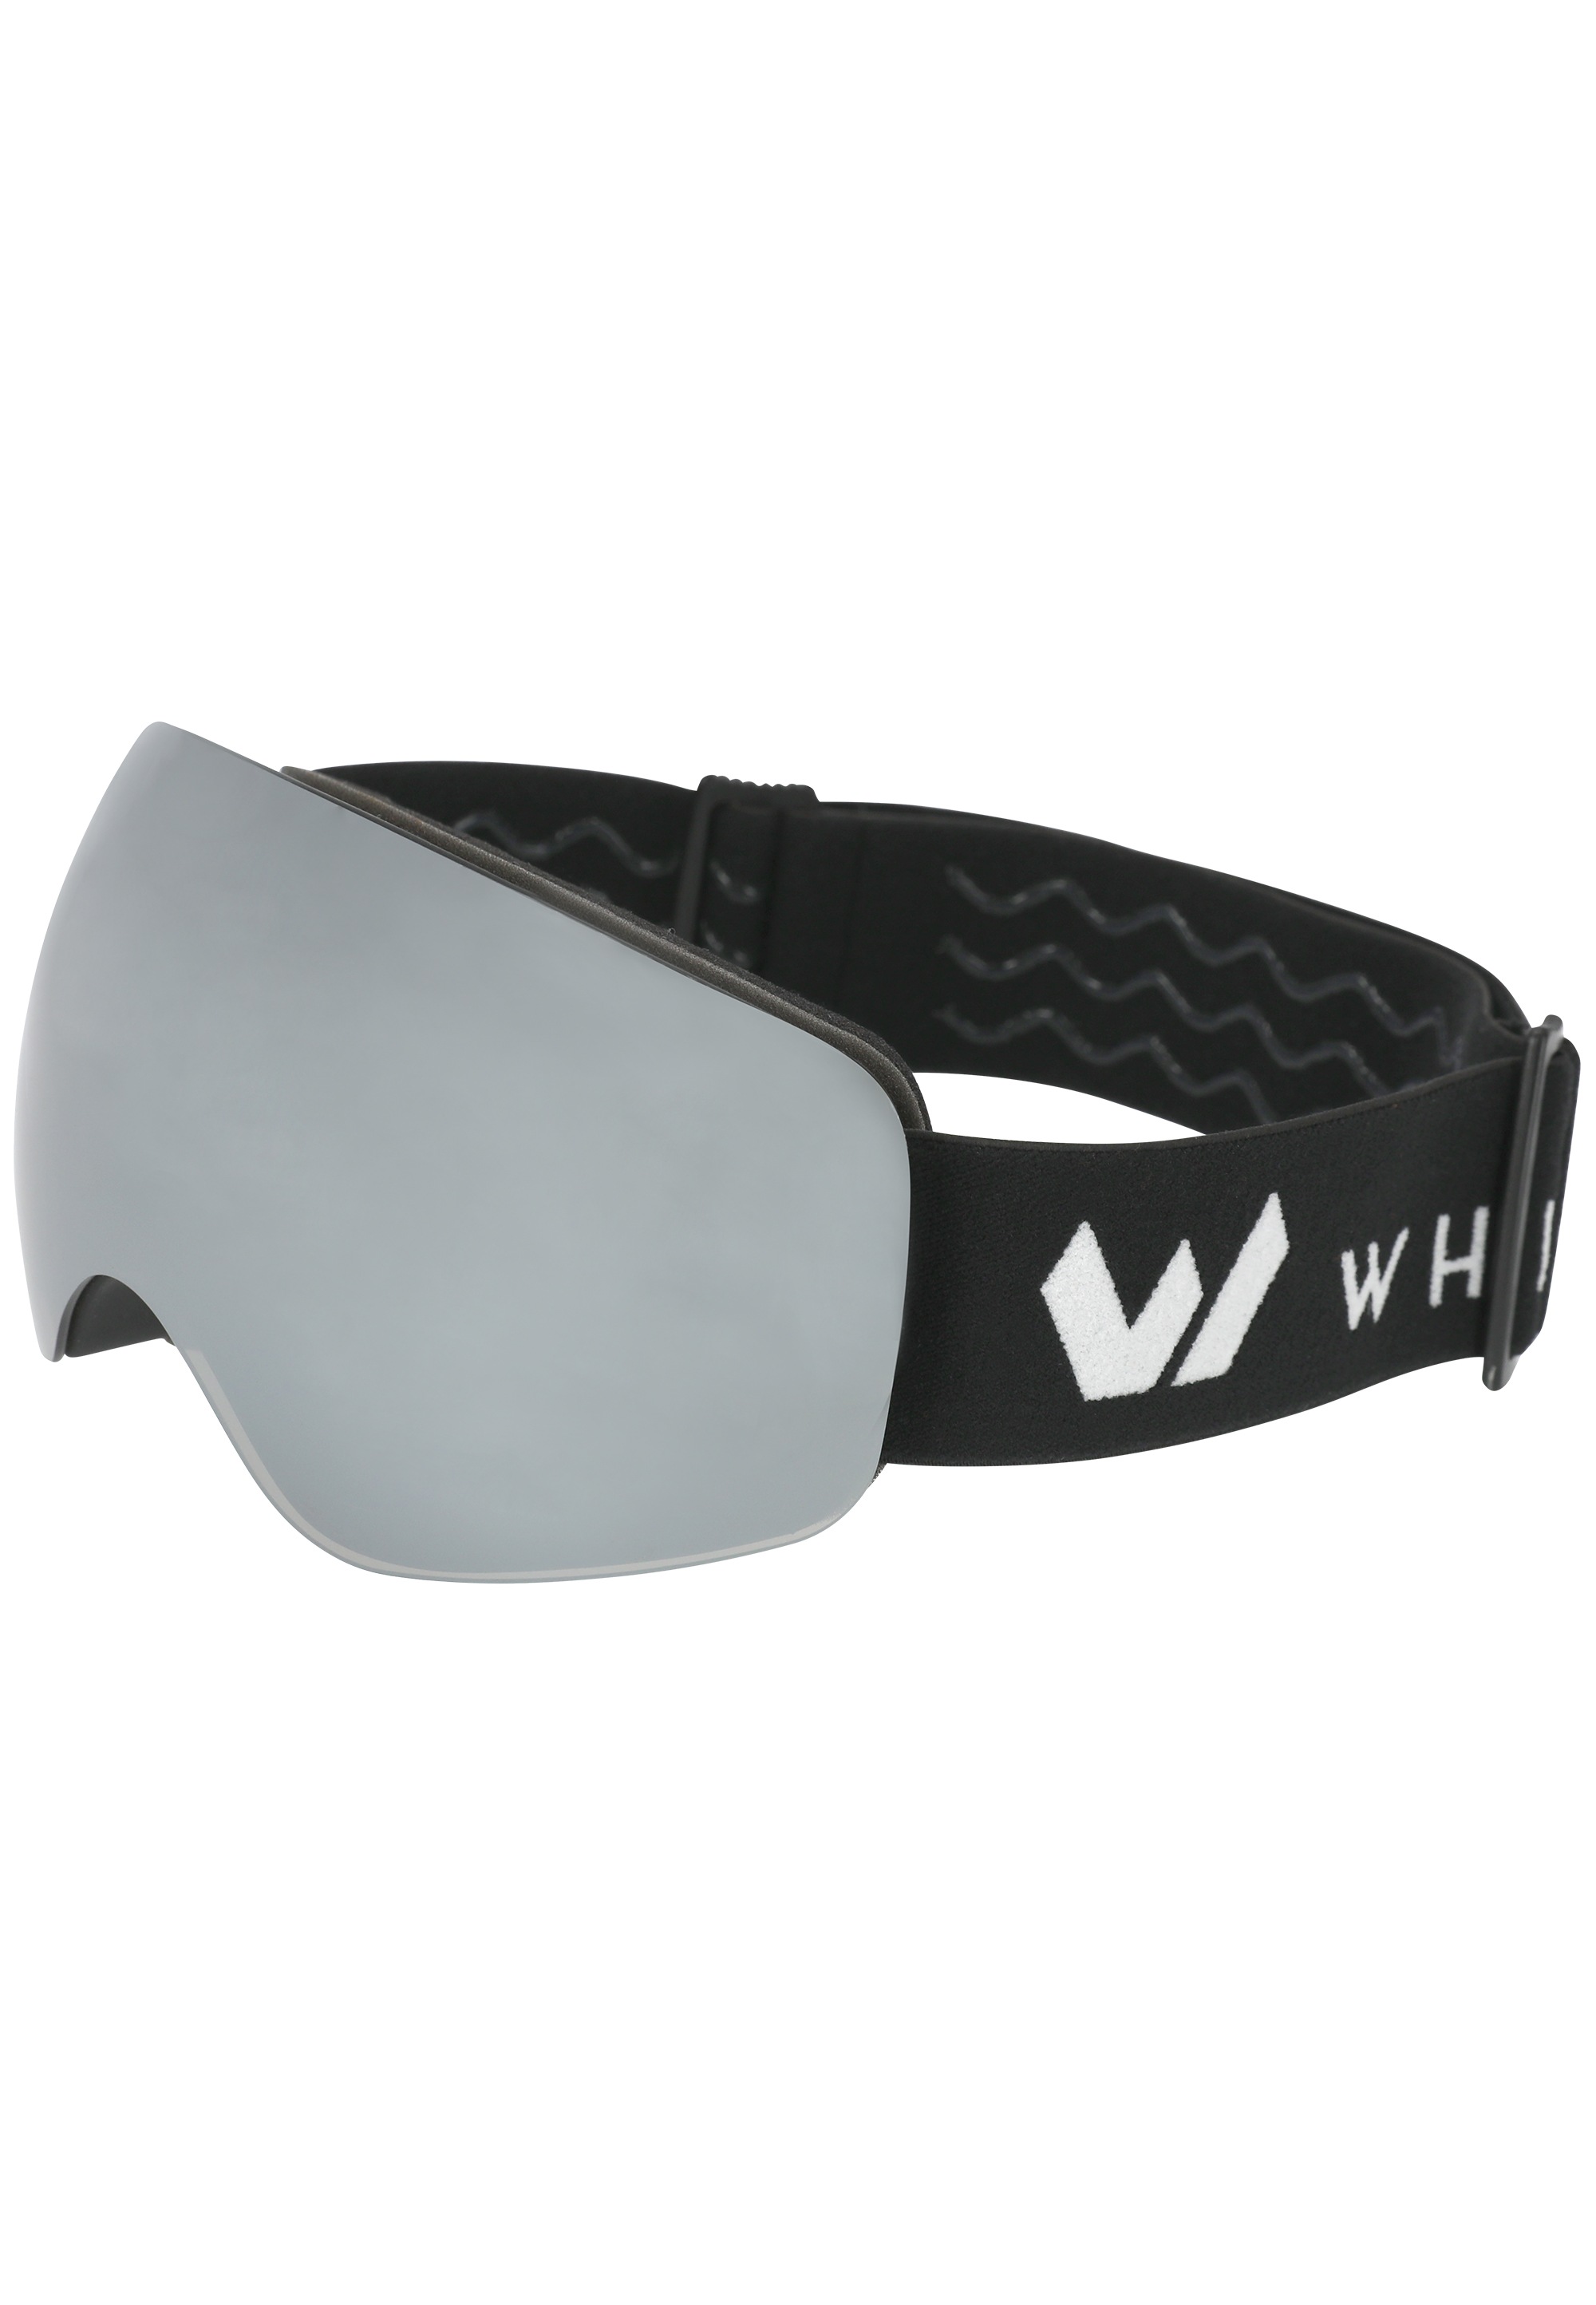 WHISTLER Skibrille »WS900 Jr.«, im rahmenlosen Design